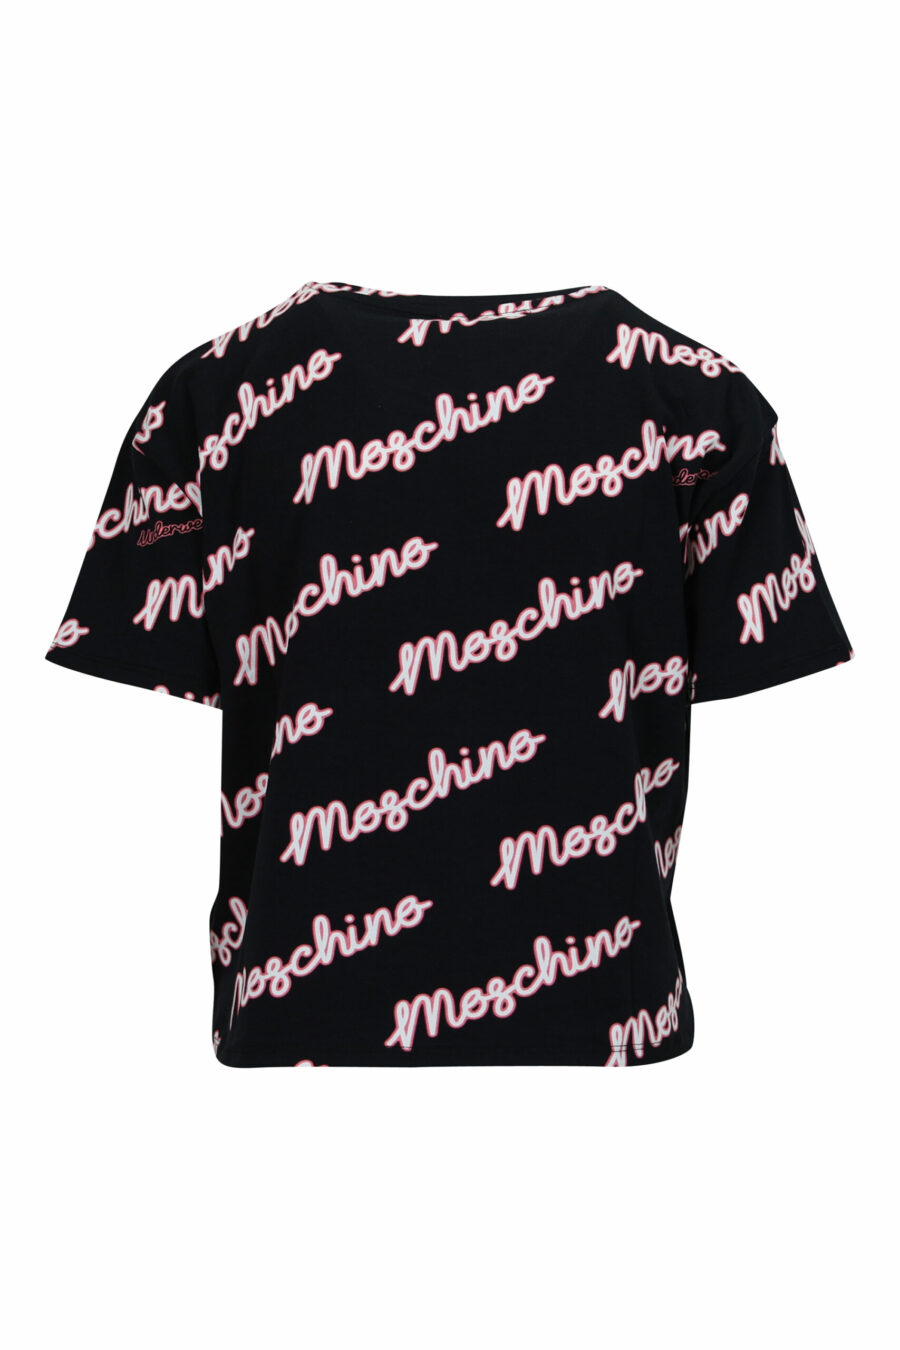 Camiseta negra con "all over logo moschino" fucsia - 108037 scaled